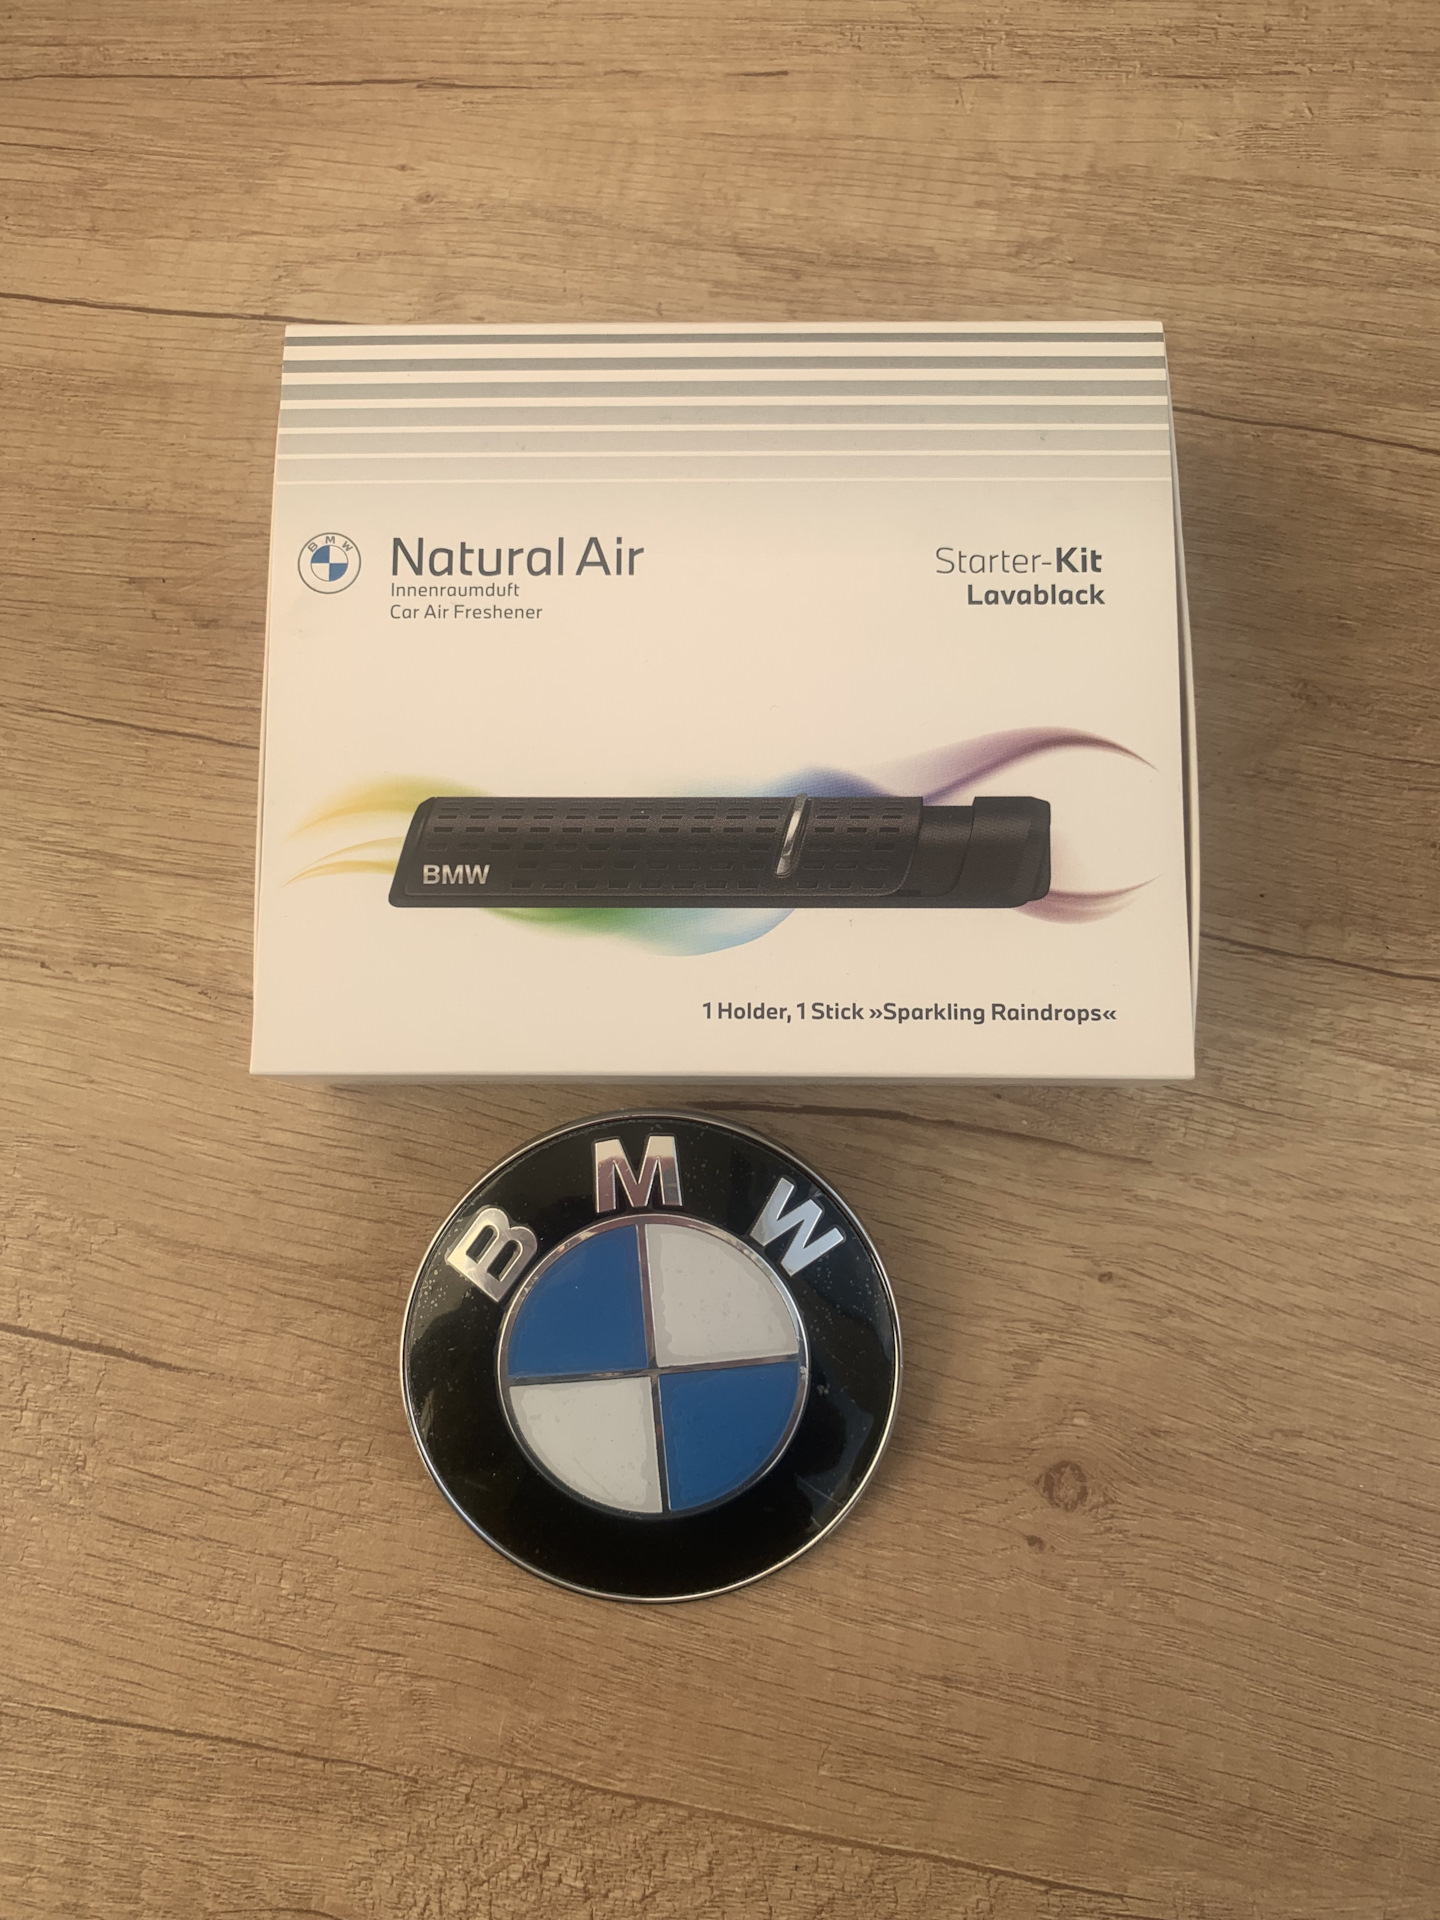 83122285677ароматизатор BMW natural Air. Ароматизатор БМВ. BMW natural Air Starter Kit. Ароматизатор БМВ оригинал. Bmw natural air